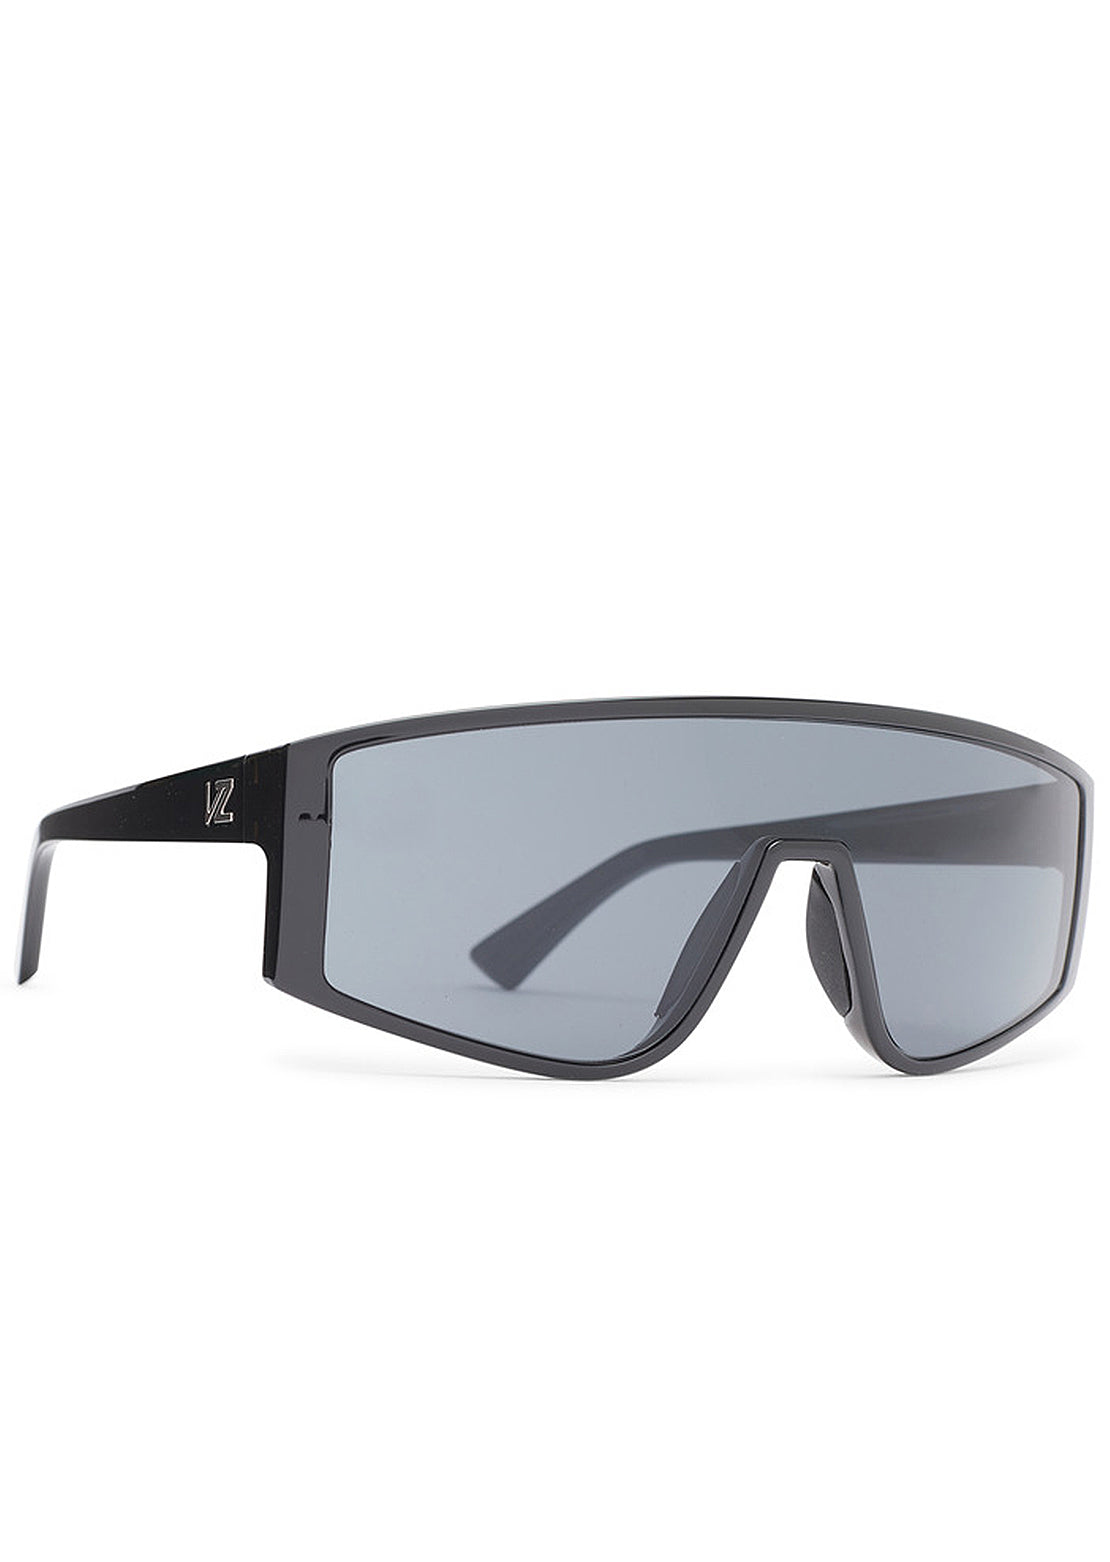 Von Zipper Men&#39;s Hyperbang Sunglasses Black Gloss/Grey